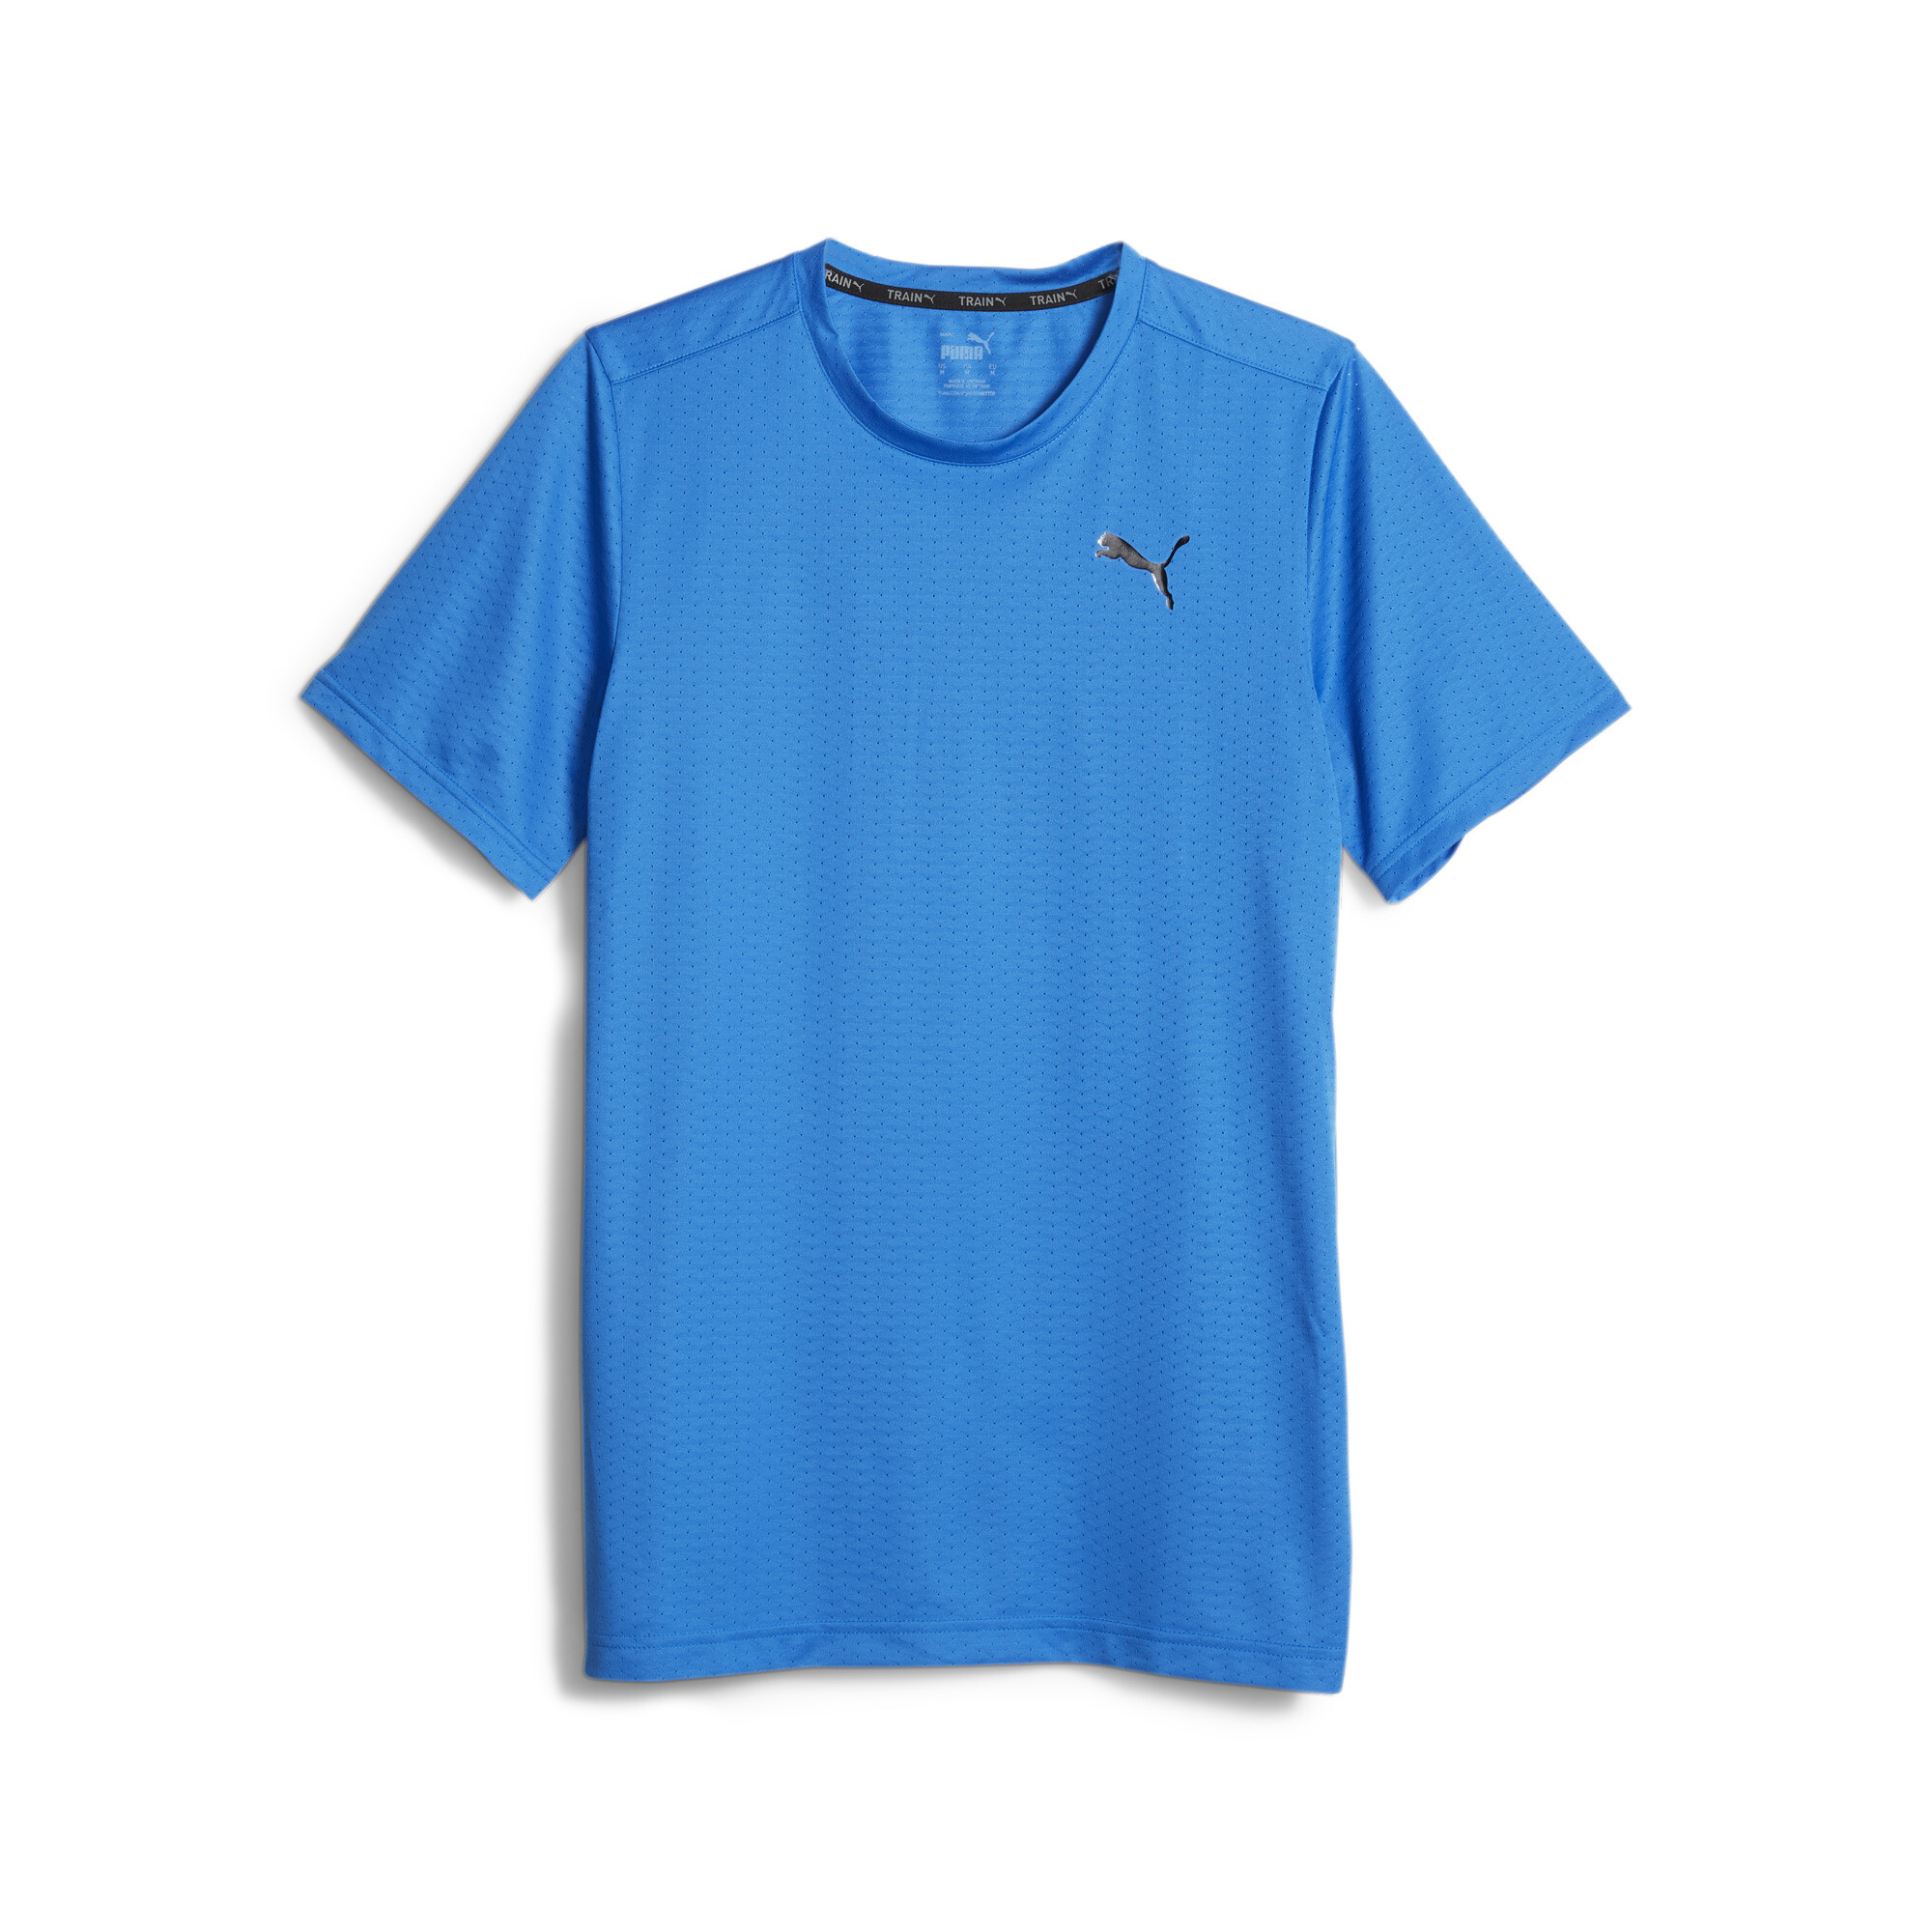 Men's Puma Favourite Blaster Training T-Shirt, Blue, Size M, Clothing